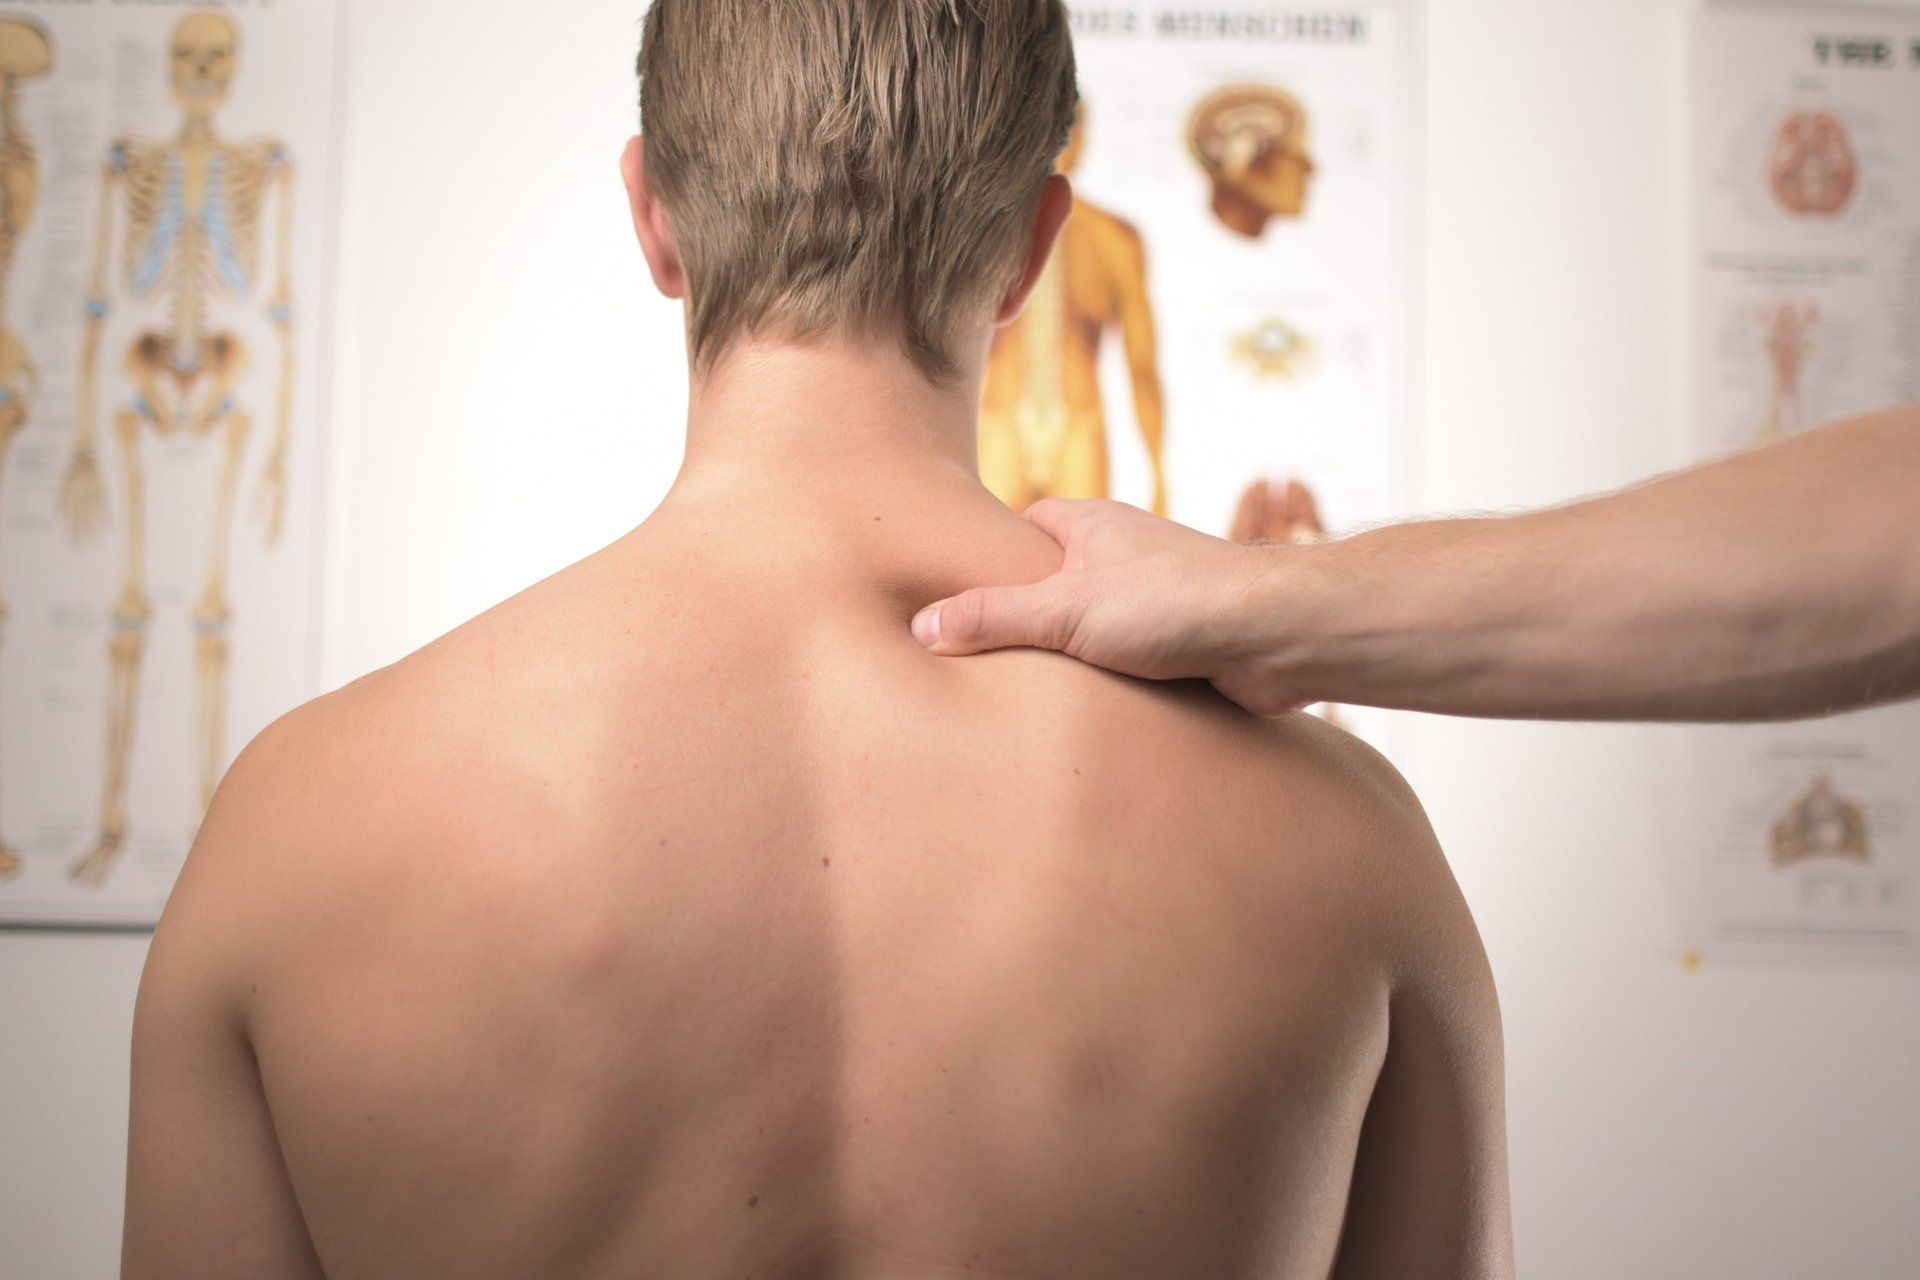 chiropractor evaluating patient's back pain